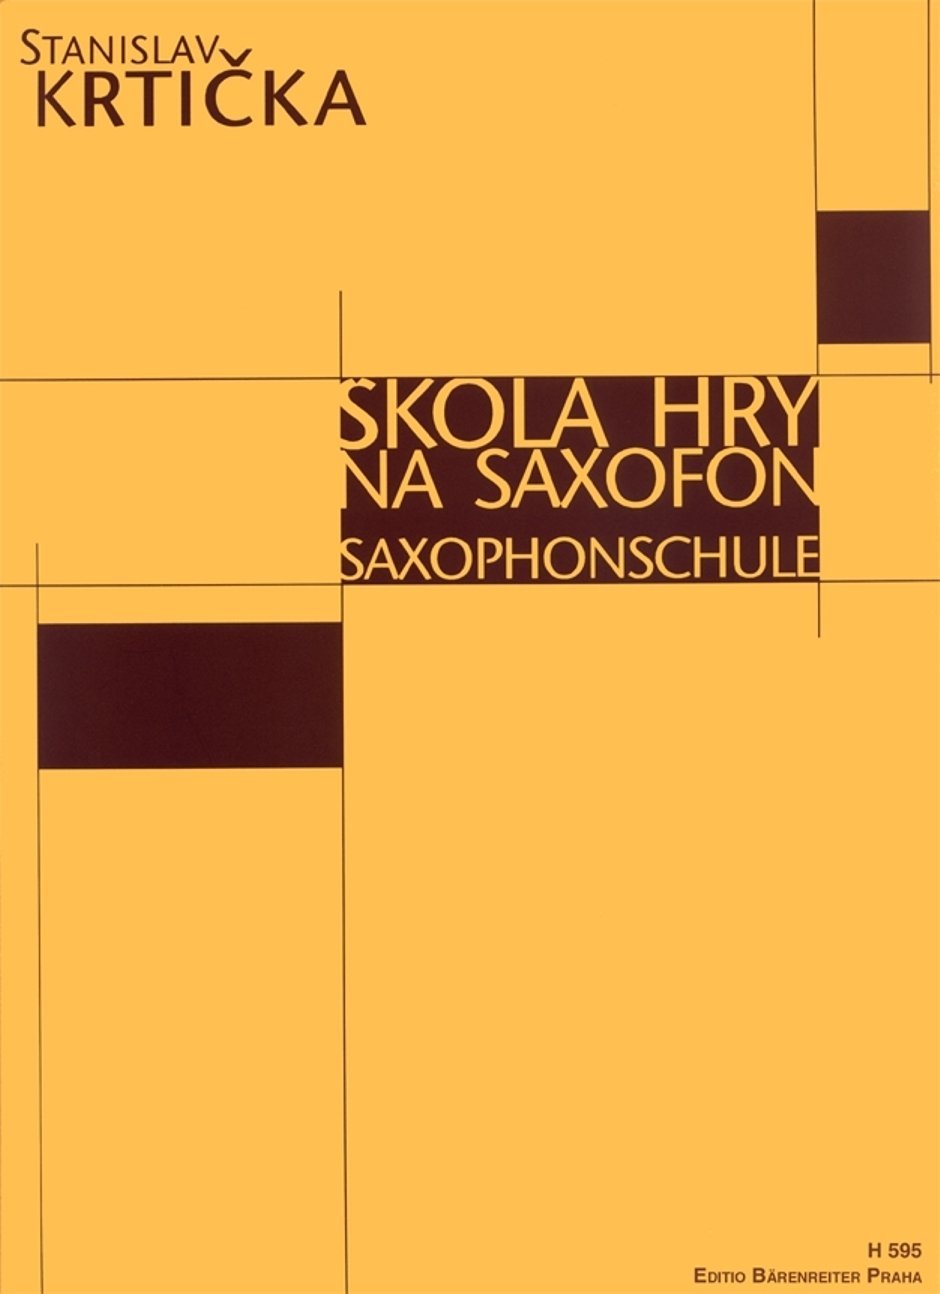 Partitions pour instruments à vent Stanislav Krtička Škola hry na saxofon Partition